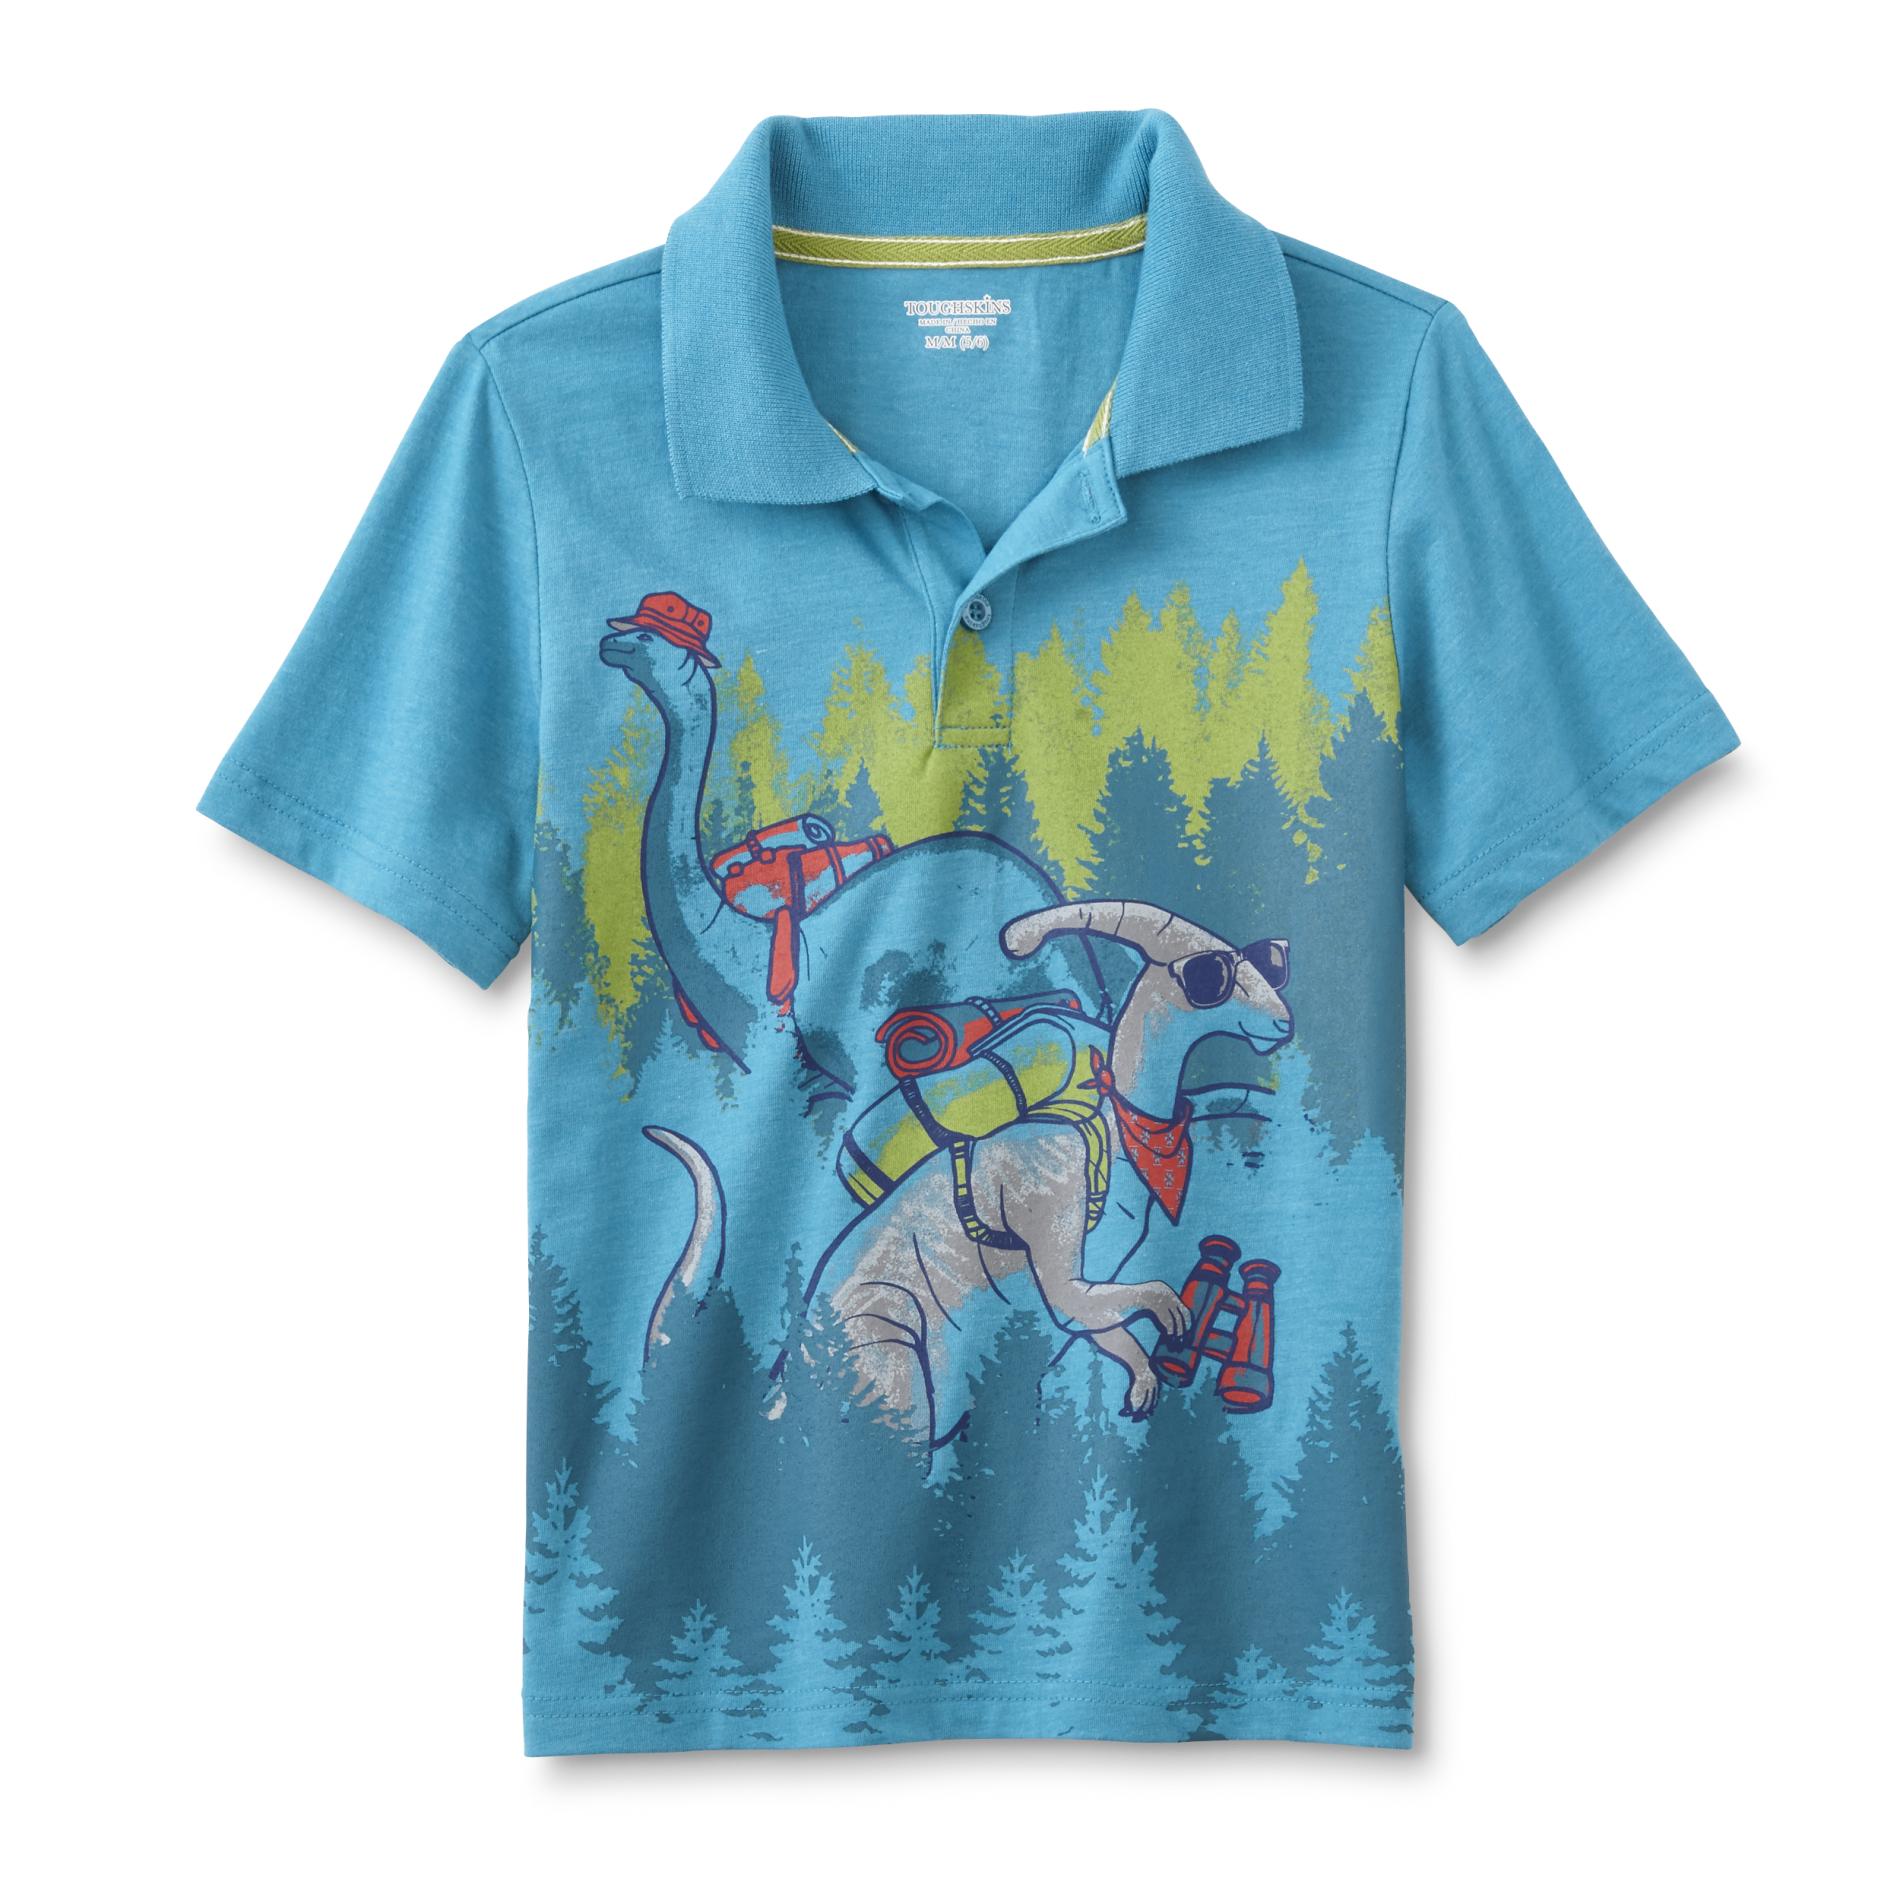 Toughskins Boy's Graphic Polo Shirt - Dinosaurs